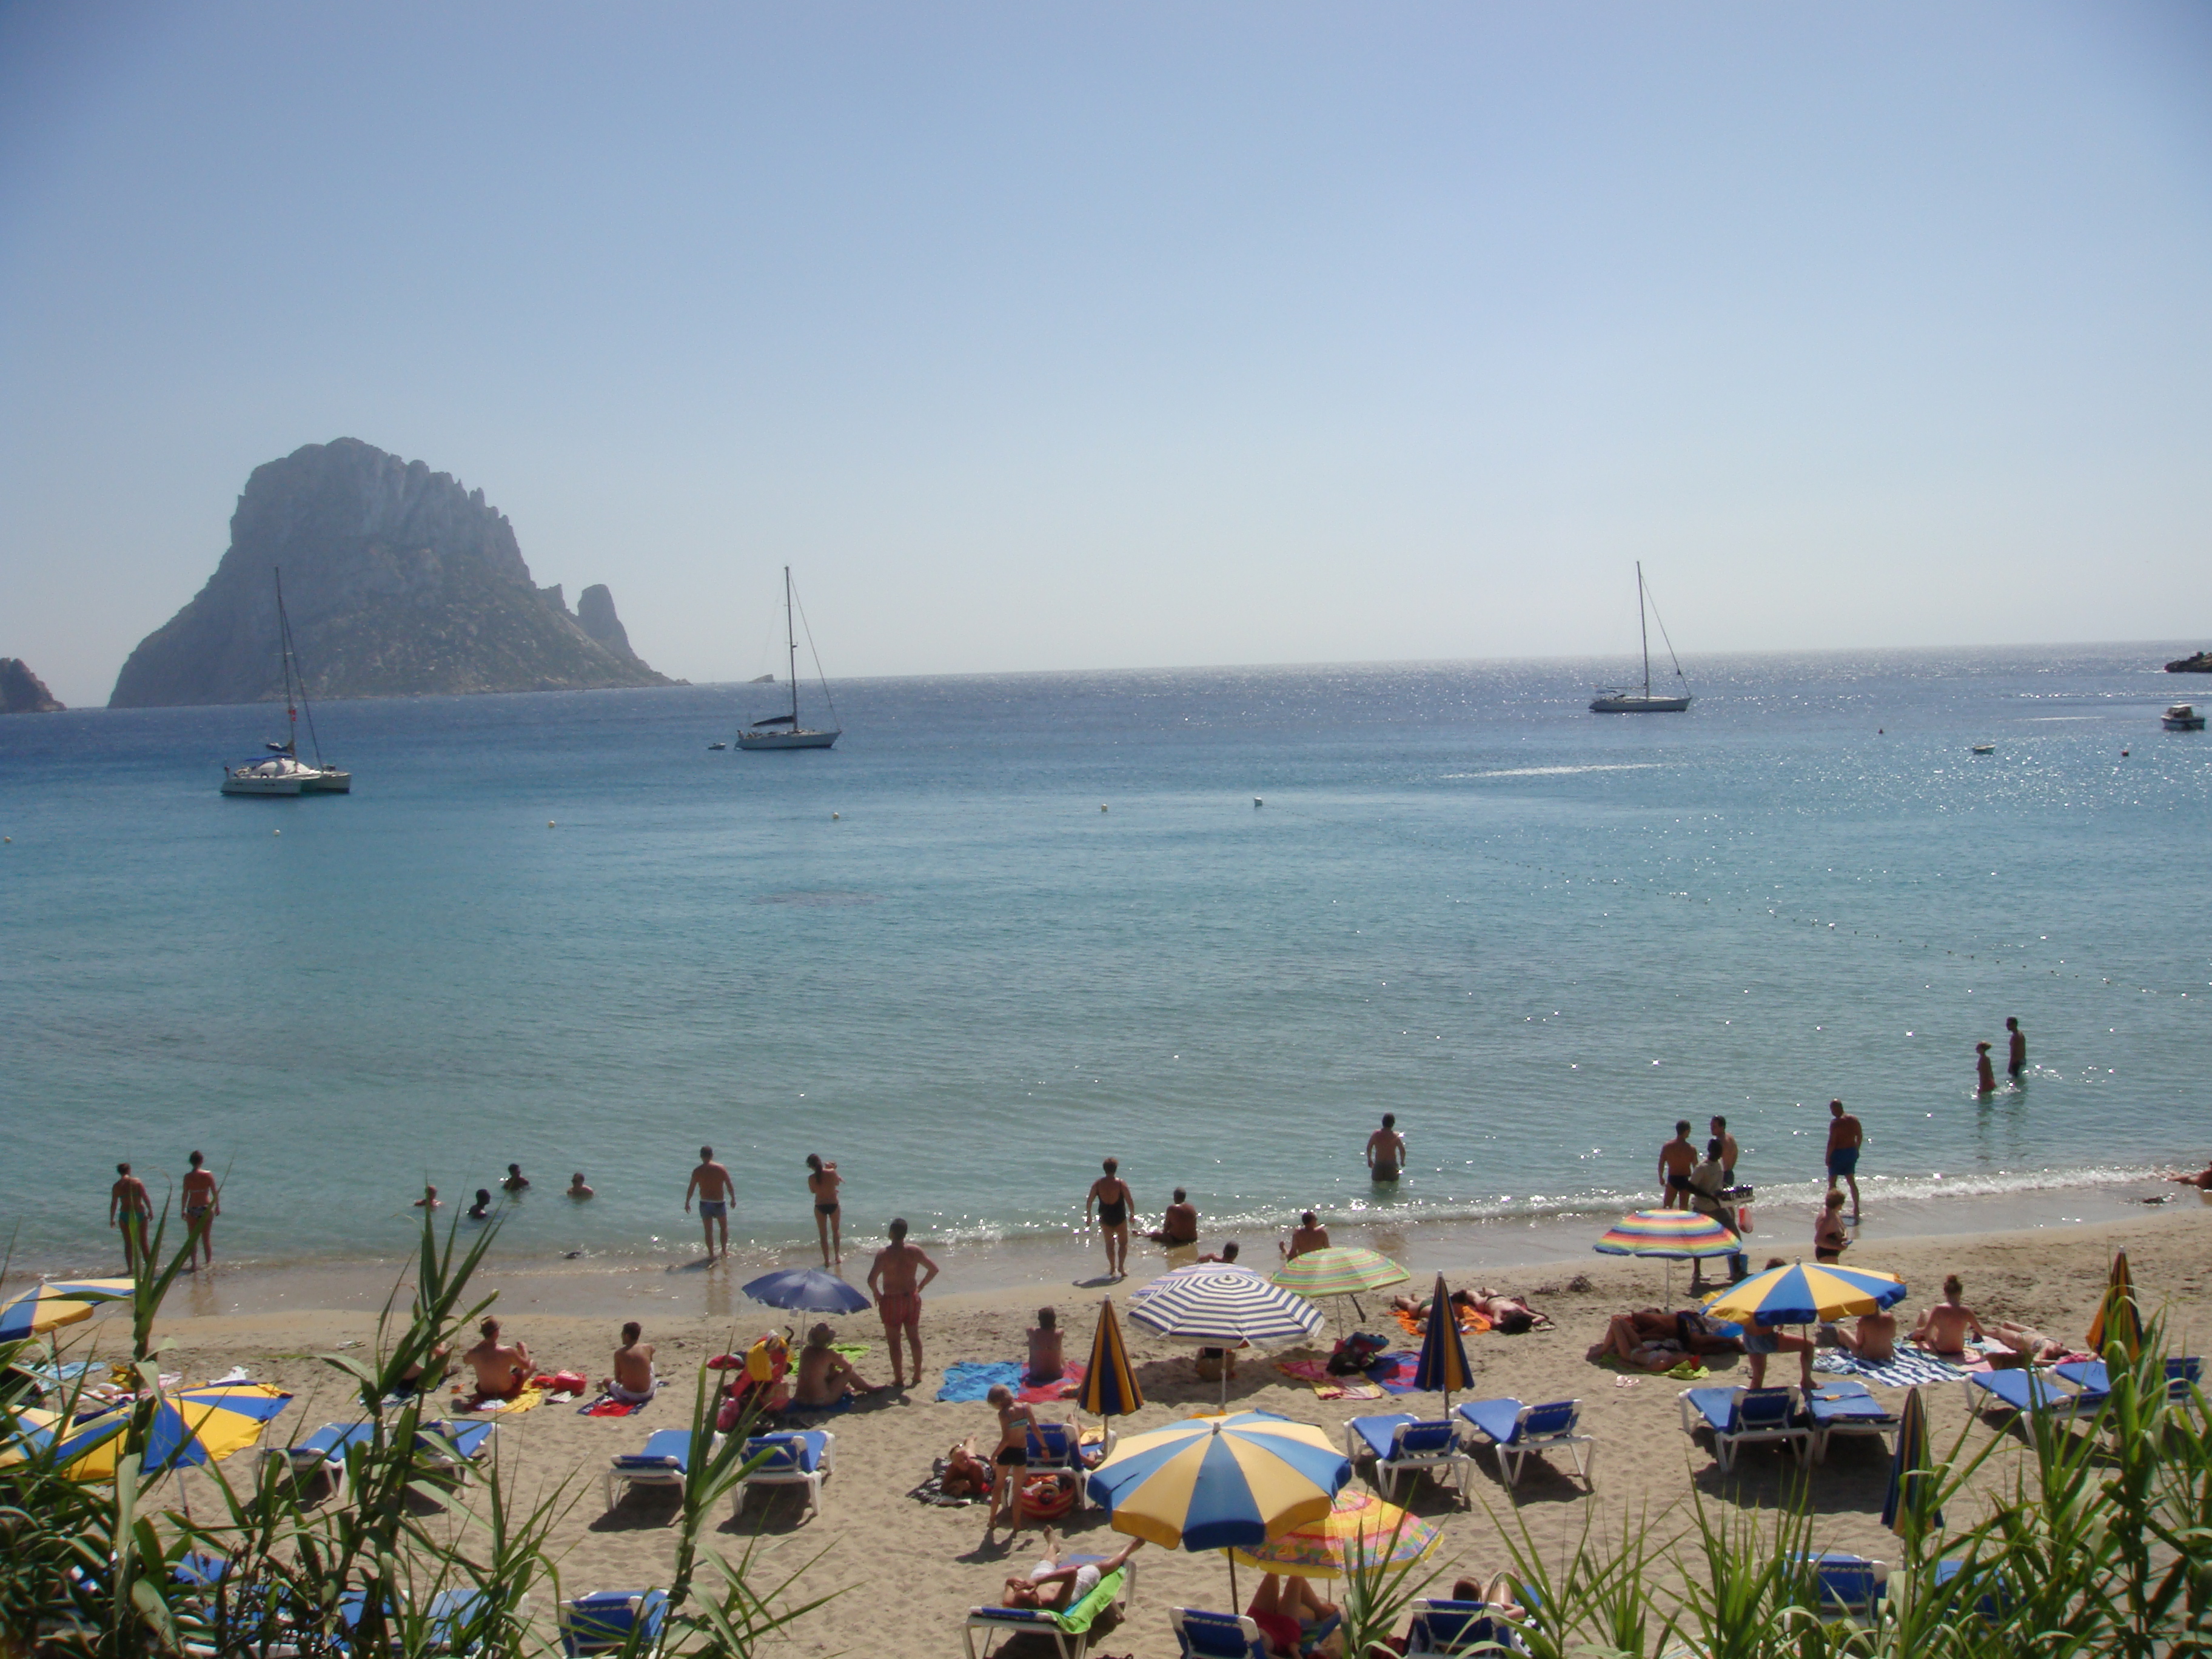 File:Ibiza, Spain (2662925415).jpg - Wikipedia